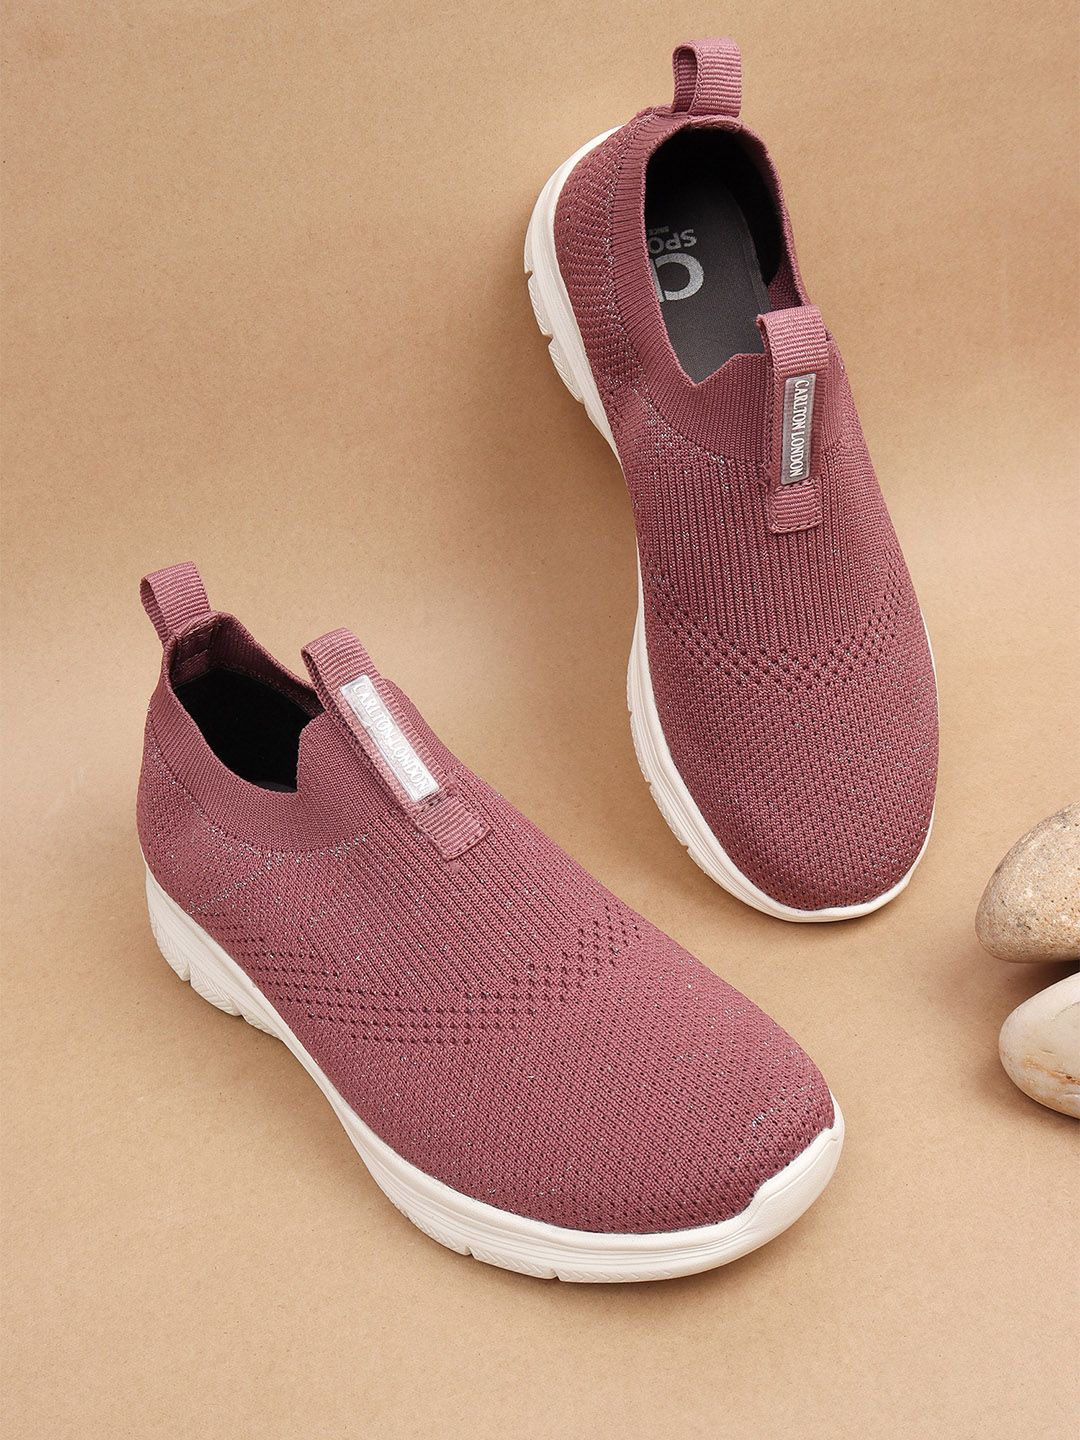 Carlton London sports Women Pink Woven Design Slip-On Sneakers Price in India